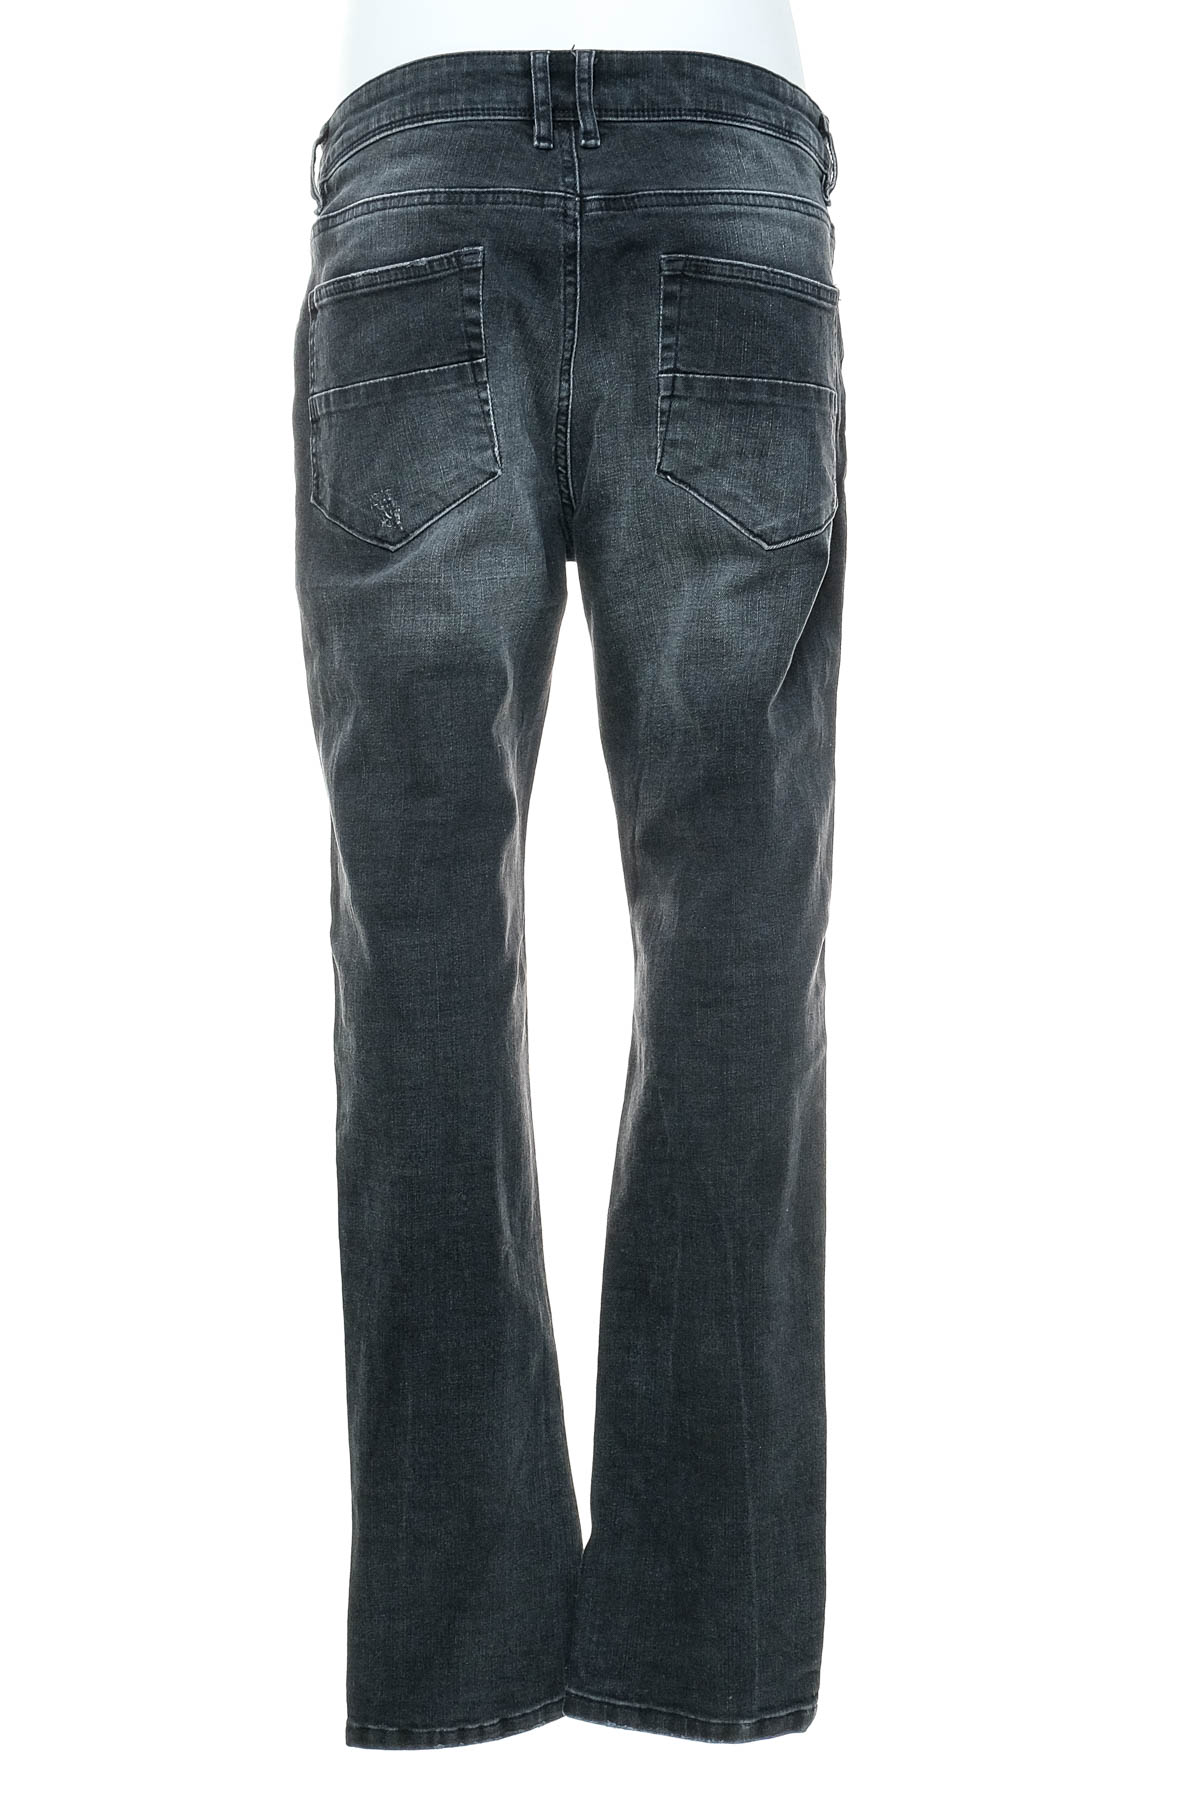 Men's jeans - Urban Style - 1